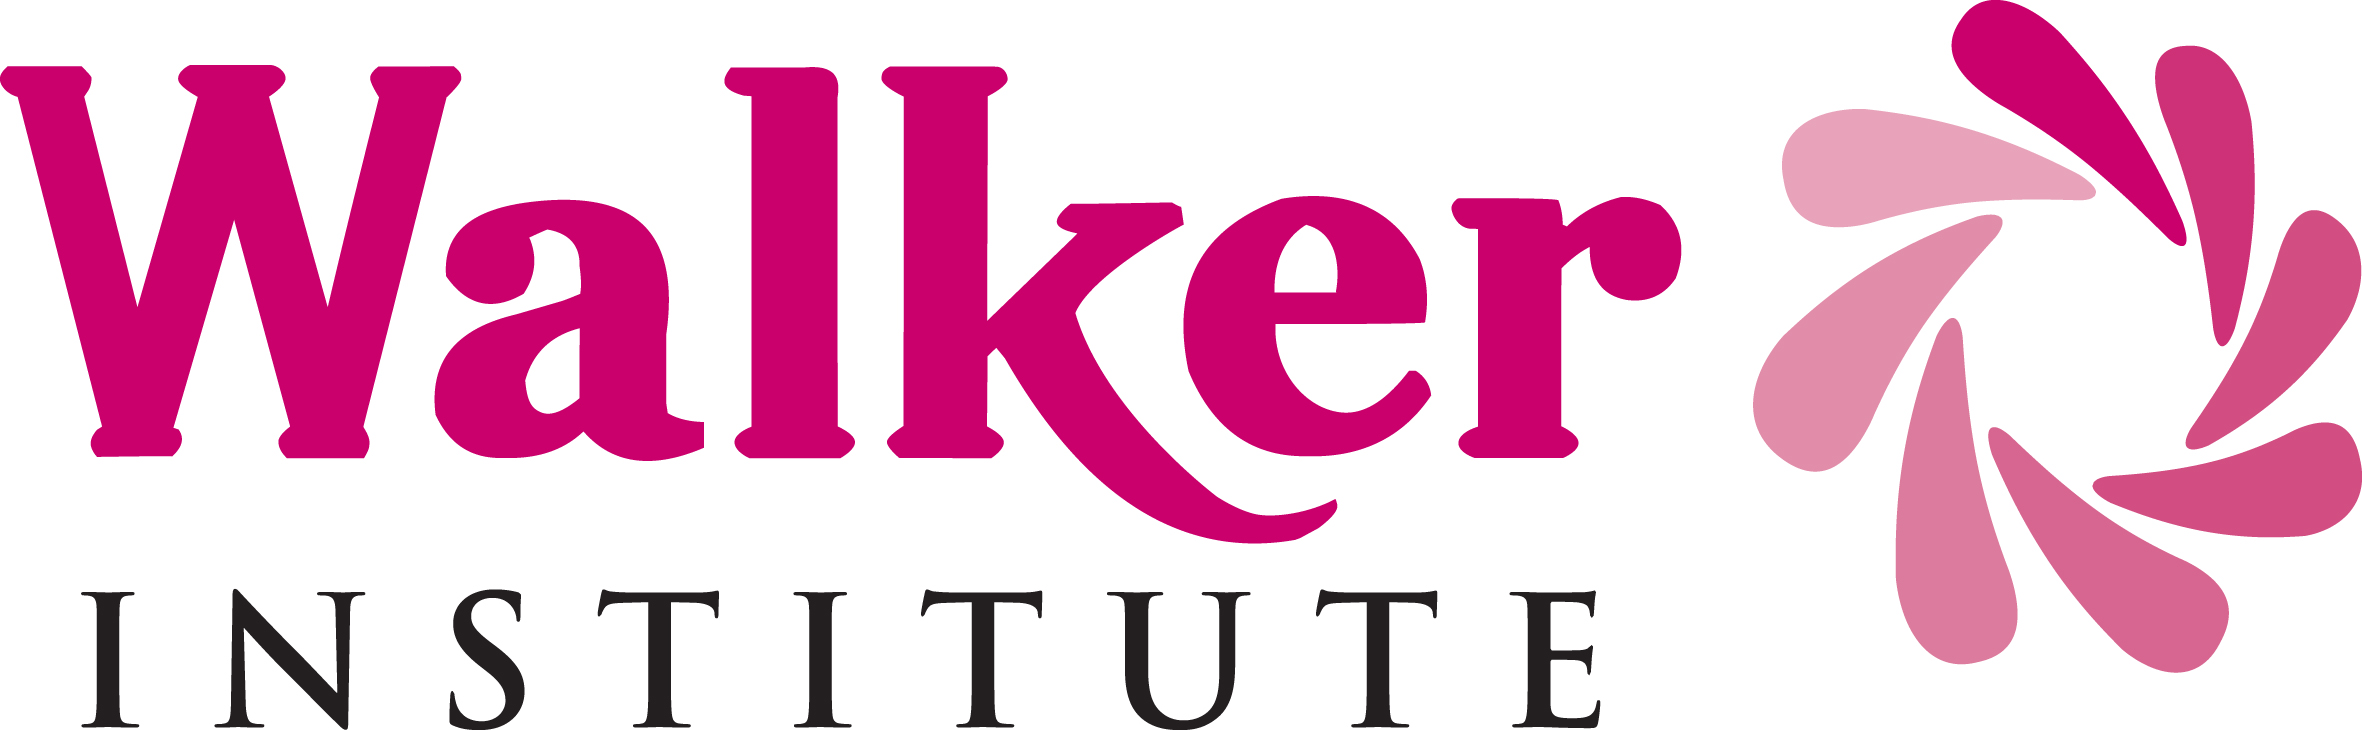 Walker Institute